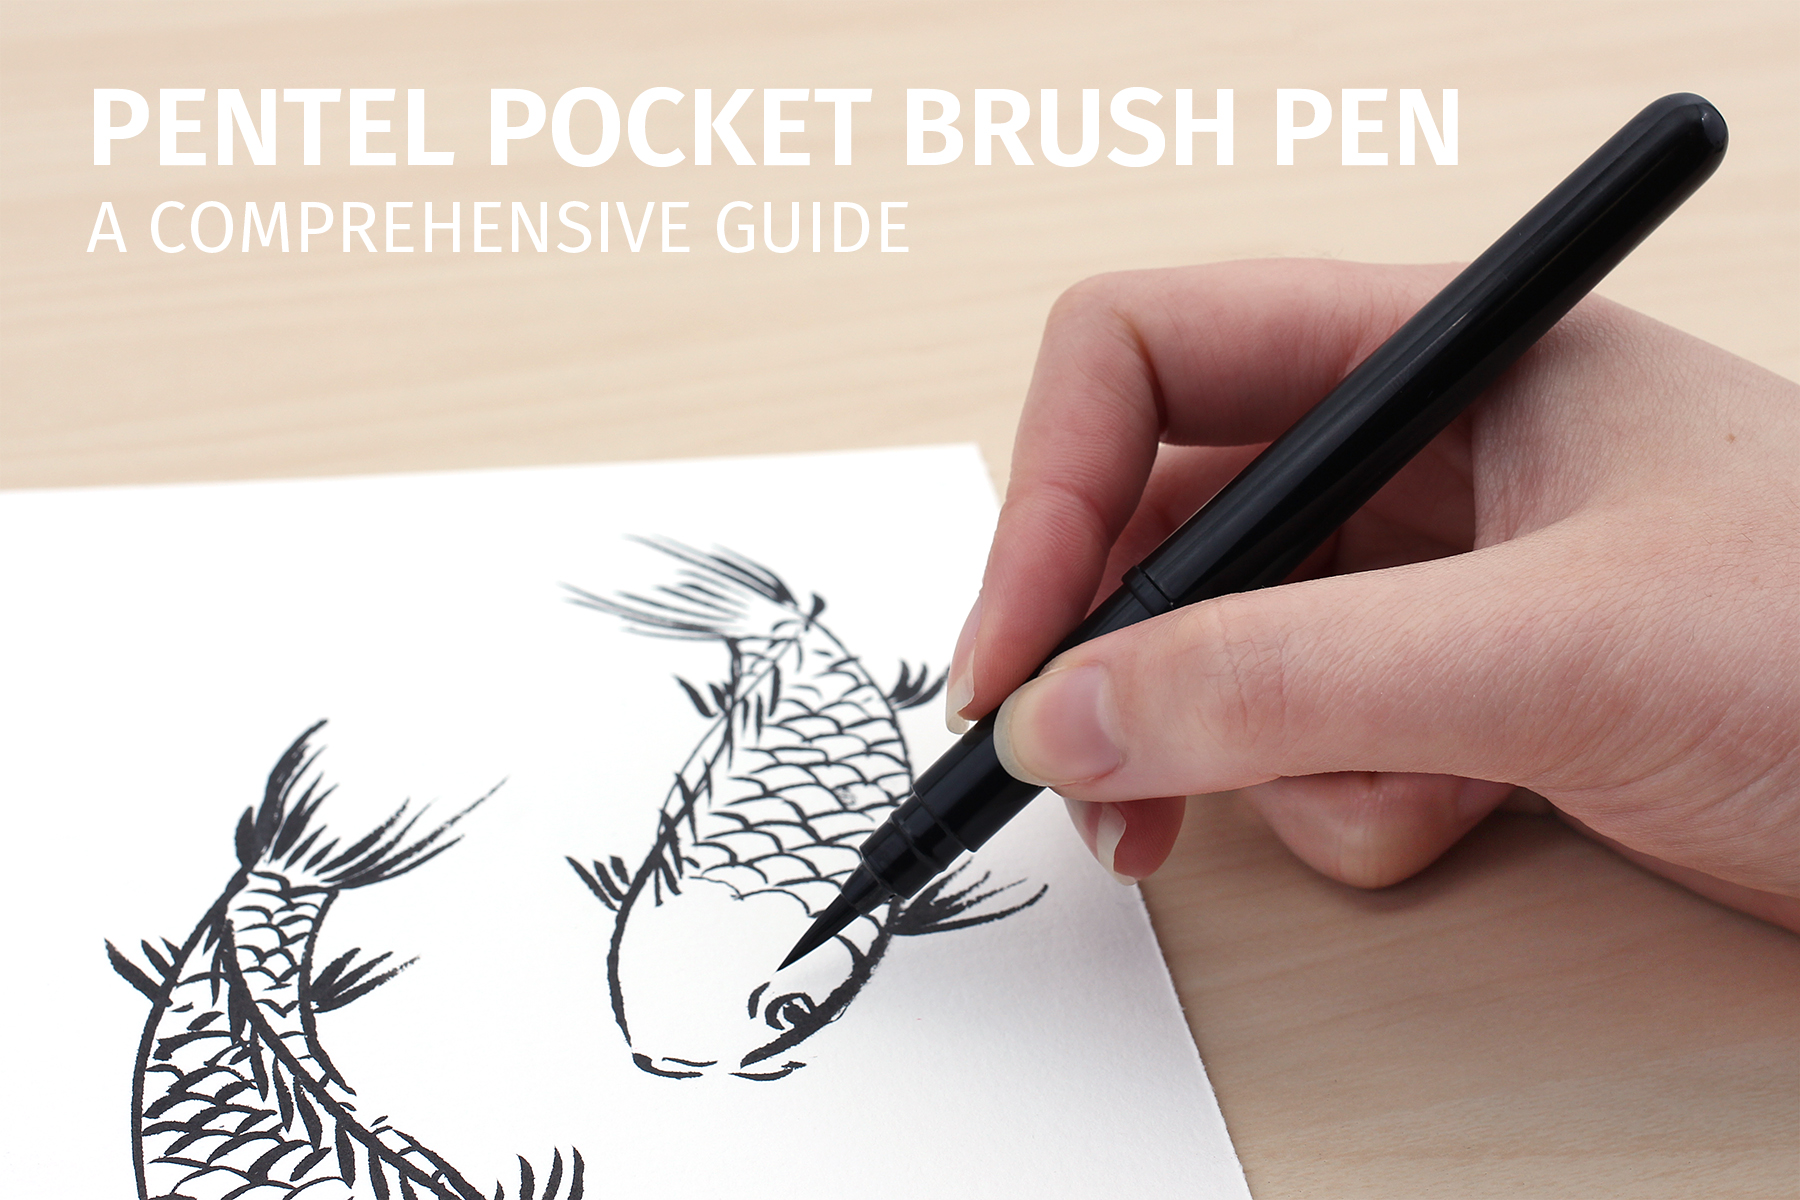 Pentel Pocket Brush Pen: A Comprehensive Guide